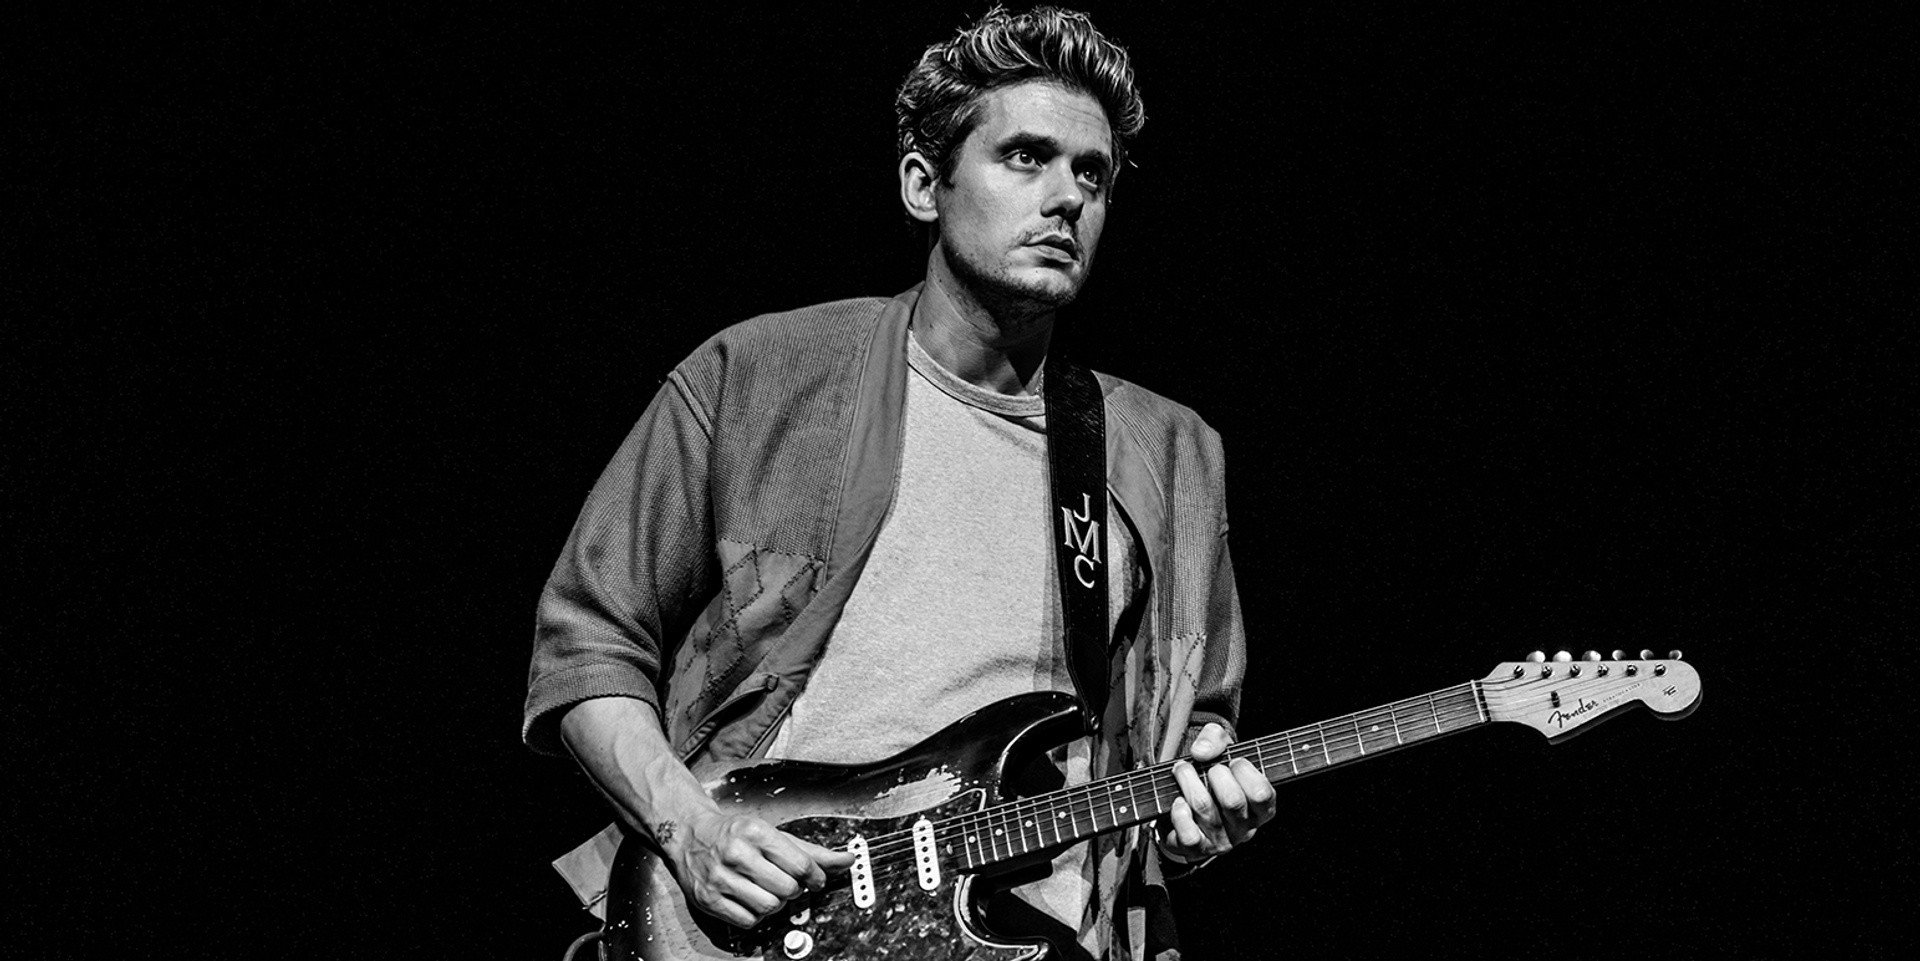 John Mayer announces Asia tour – Singapore, Jakarta, and more confirmed